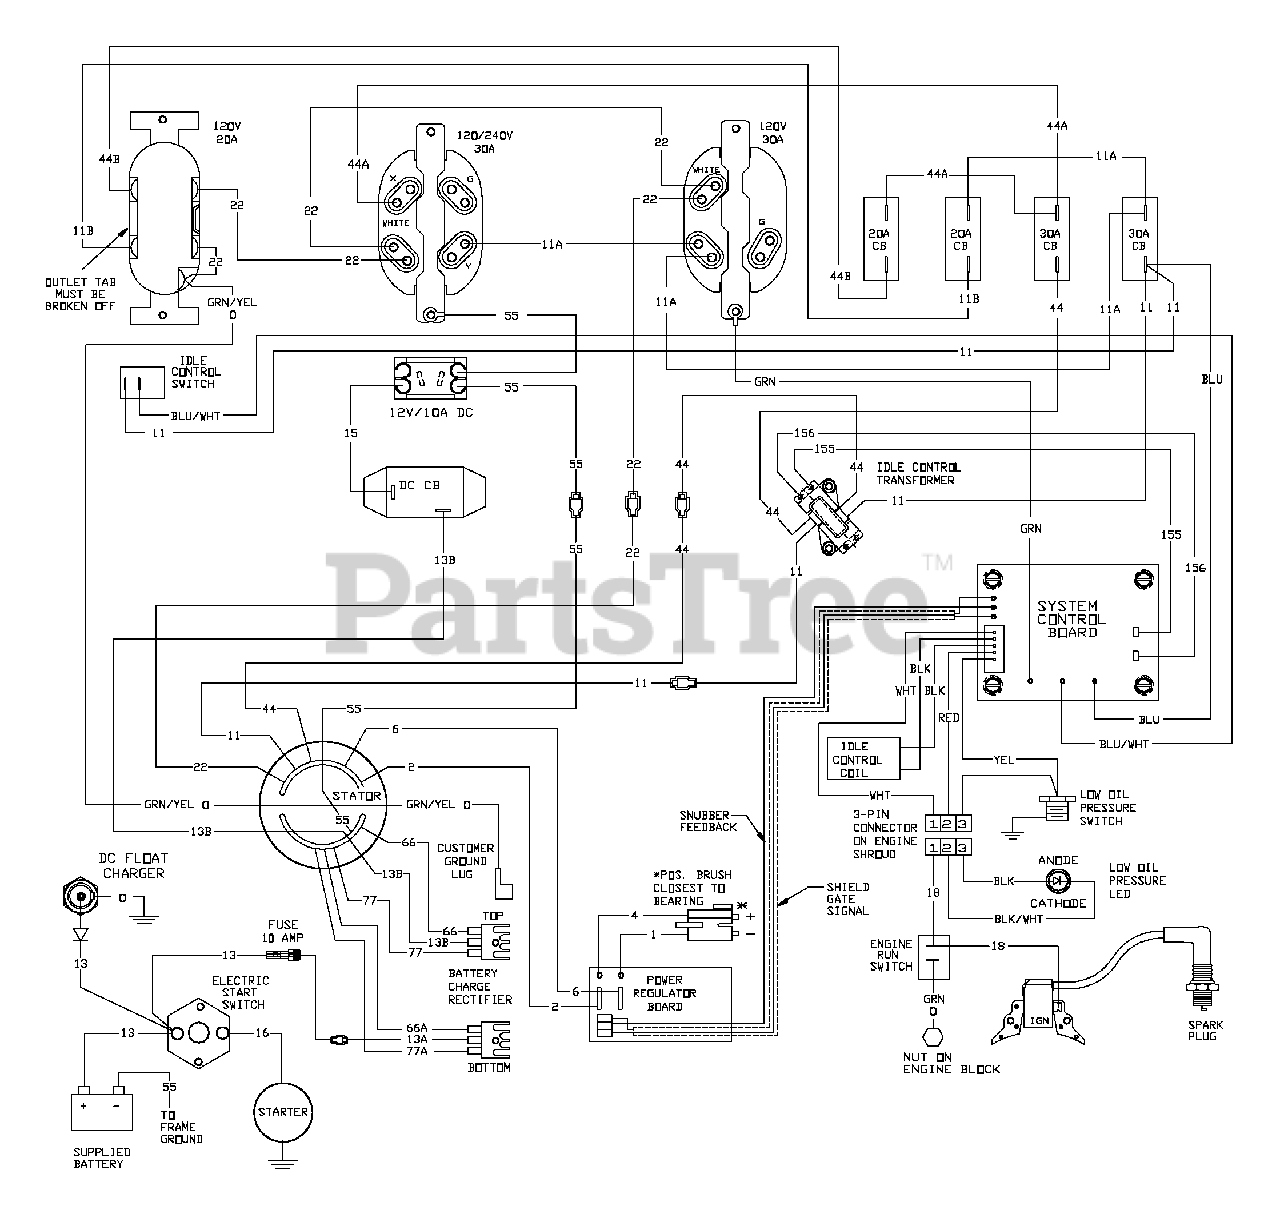 Generac 1470-1 - Generac EXL 7,500 Watt Portable Generator Wiring Diagram  Parts Lookup with Diagrams | PartsTree Briggs and Stratton Generator Wiring Diagram PartsTree